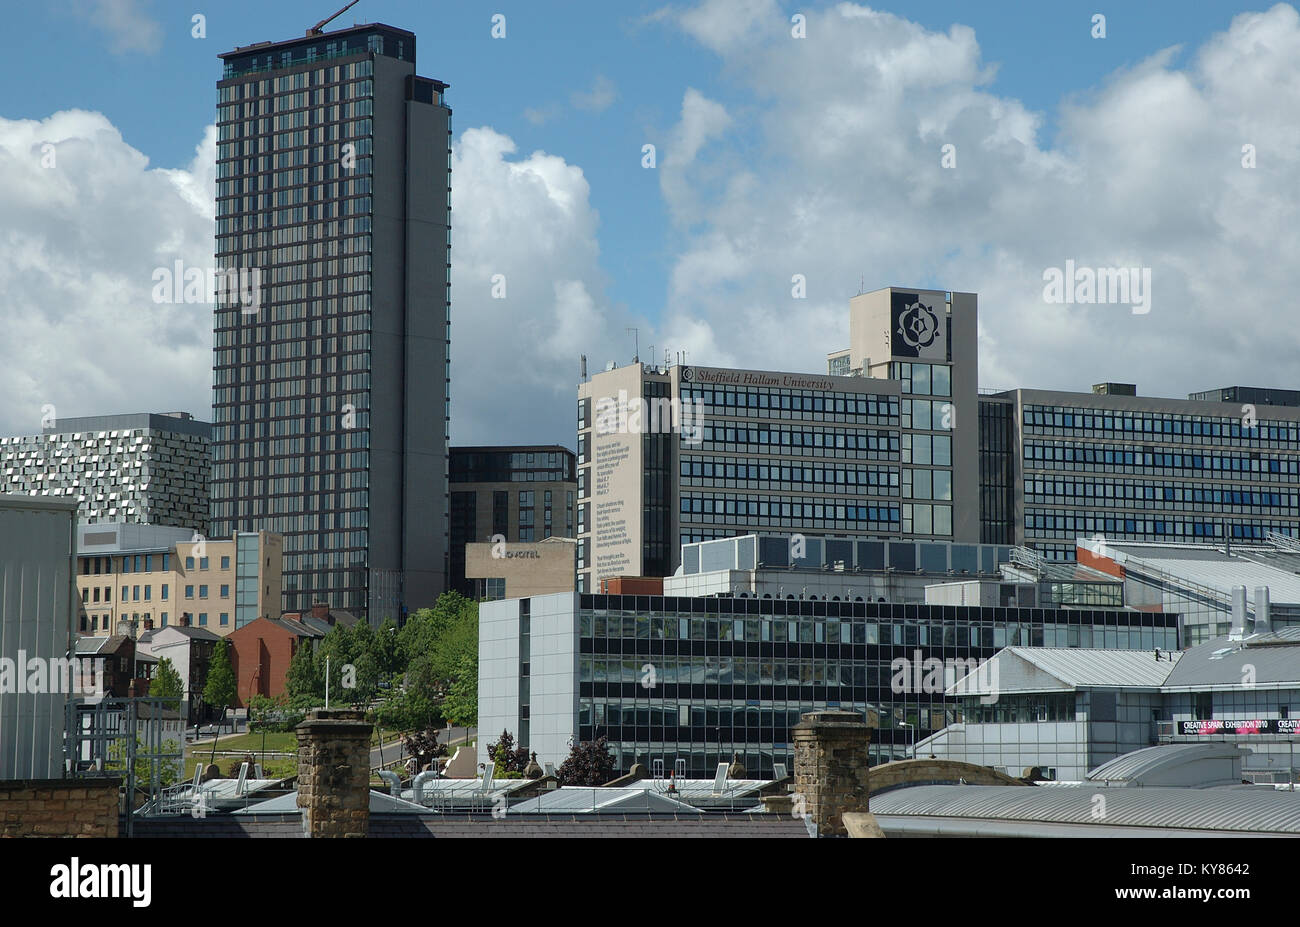 Luftige Höhen; St Paul's Tower; Sheffield Hallam University, Sheffield, South Yorkshire, England, UK. Vereinigtes Königreich; Europa. Stockfoto